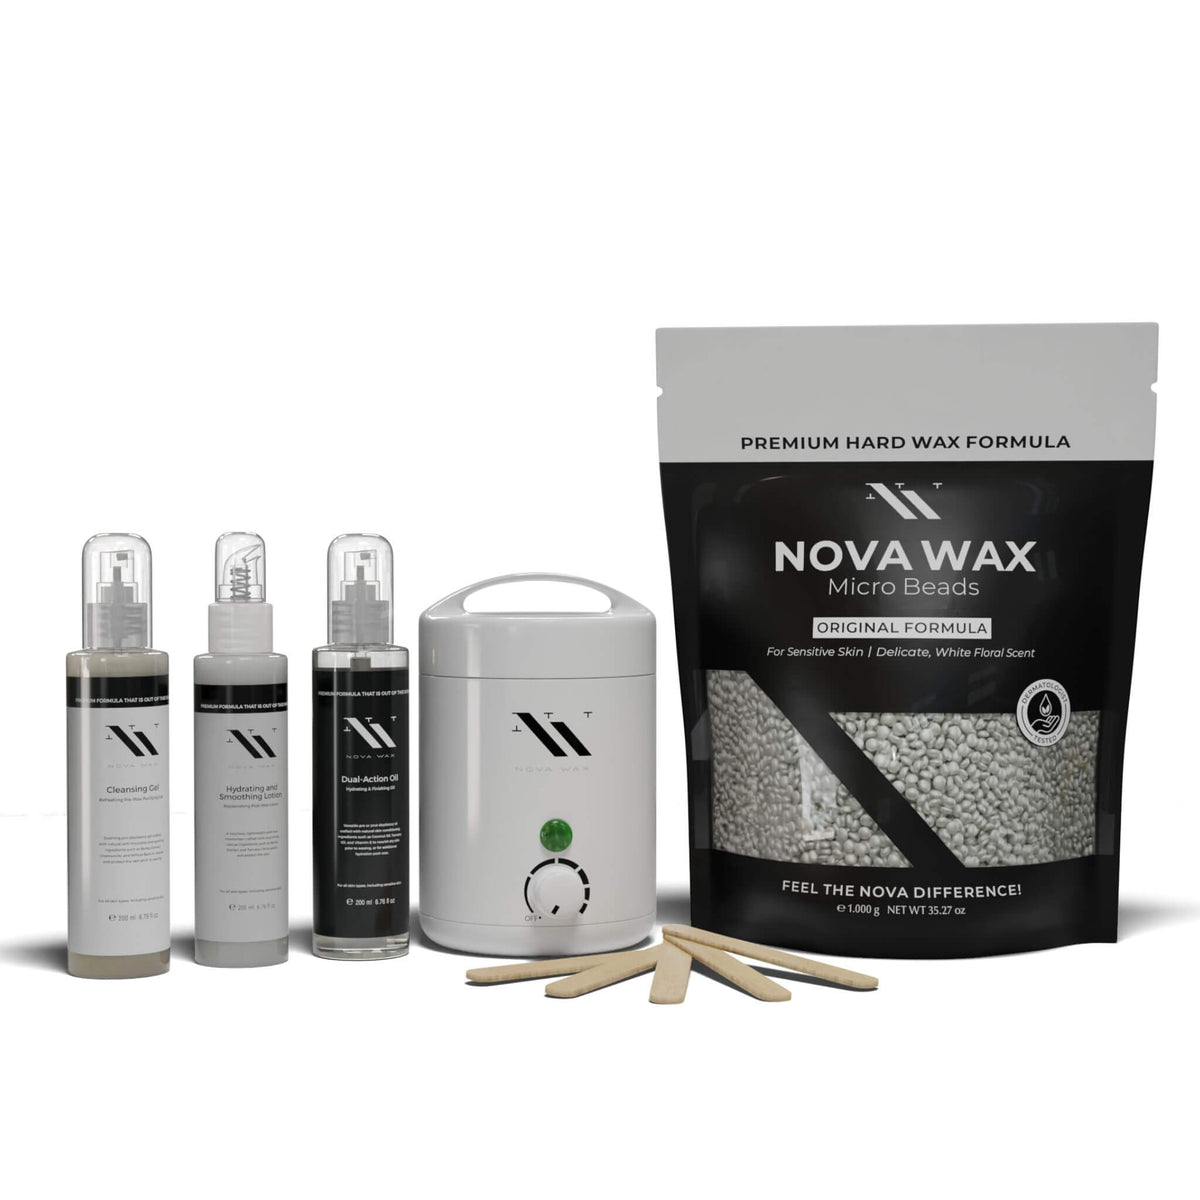 Nova Wax - Luxury Wax Made by an Esthetician